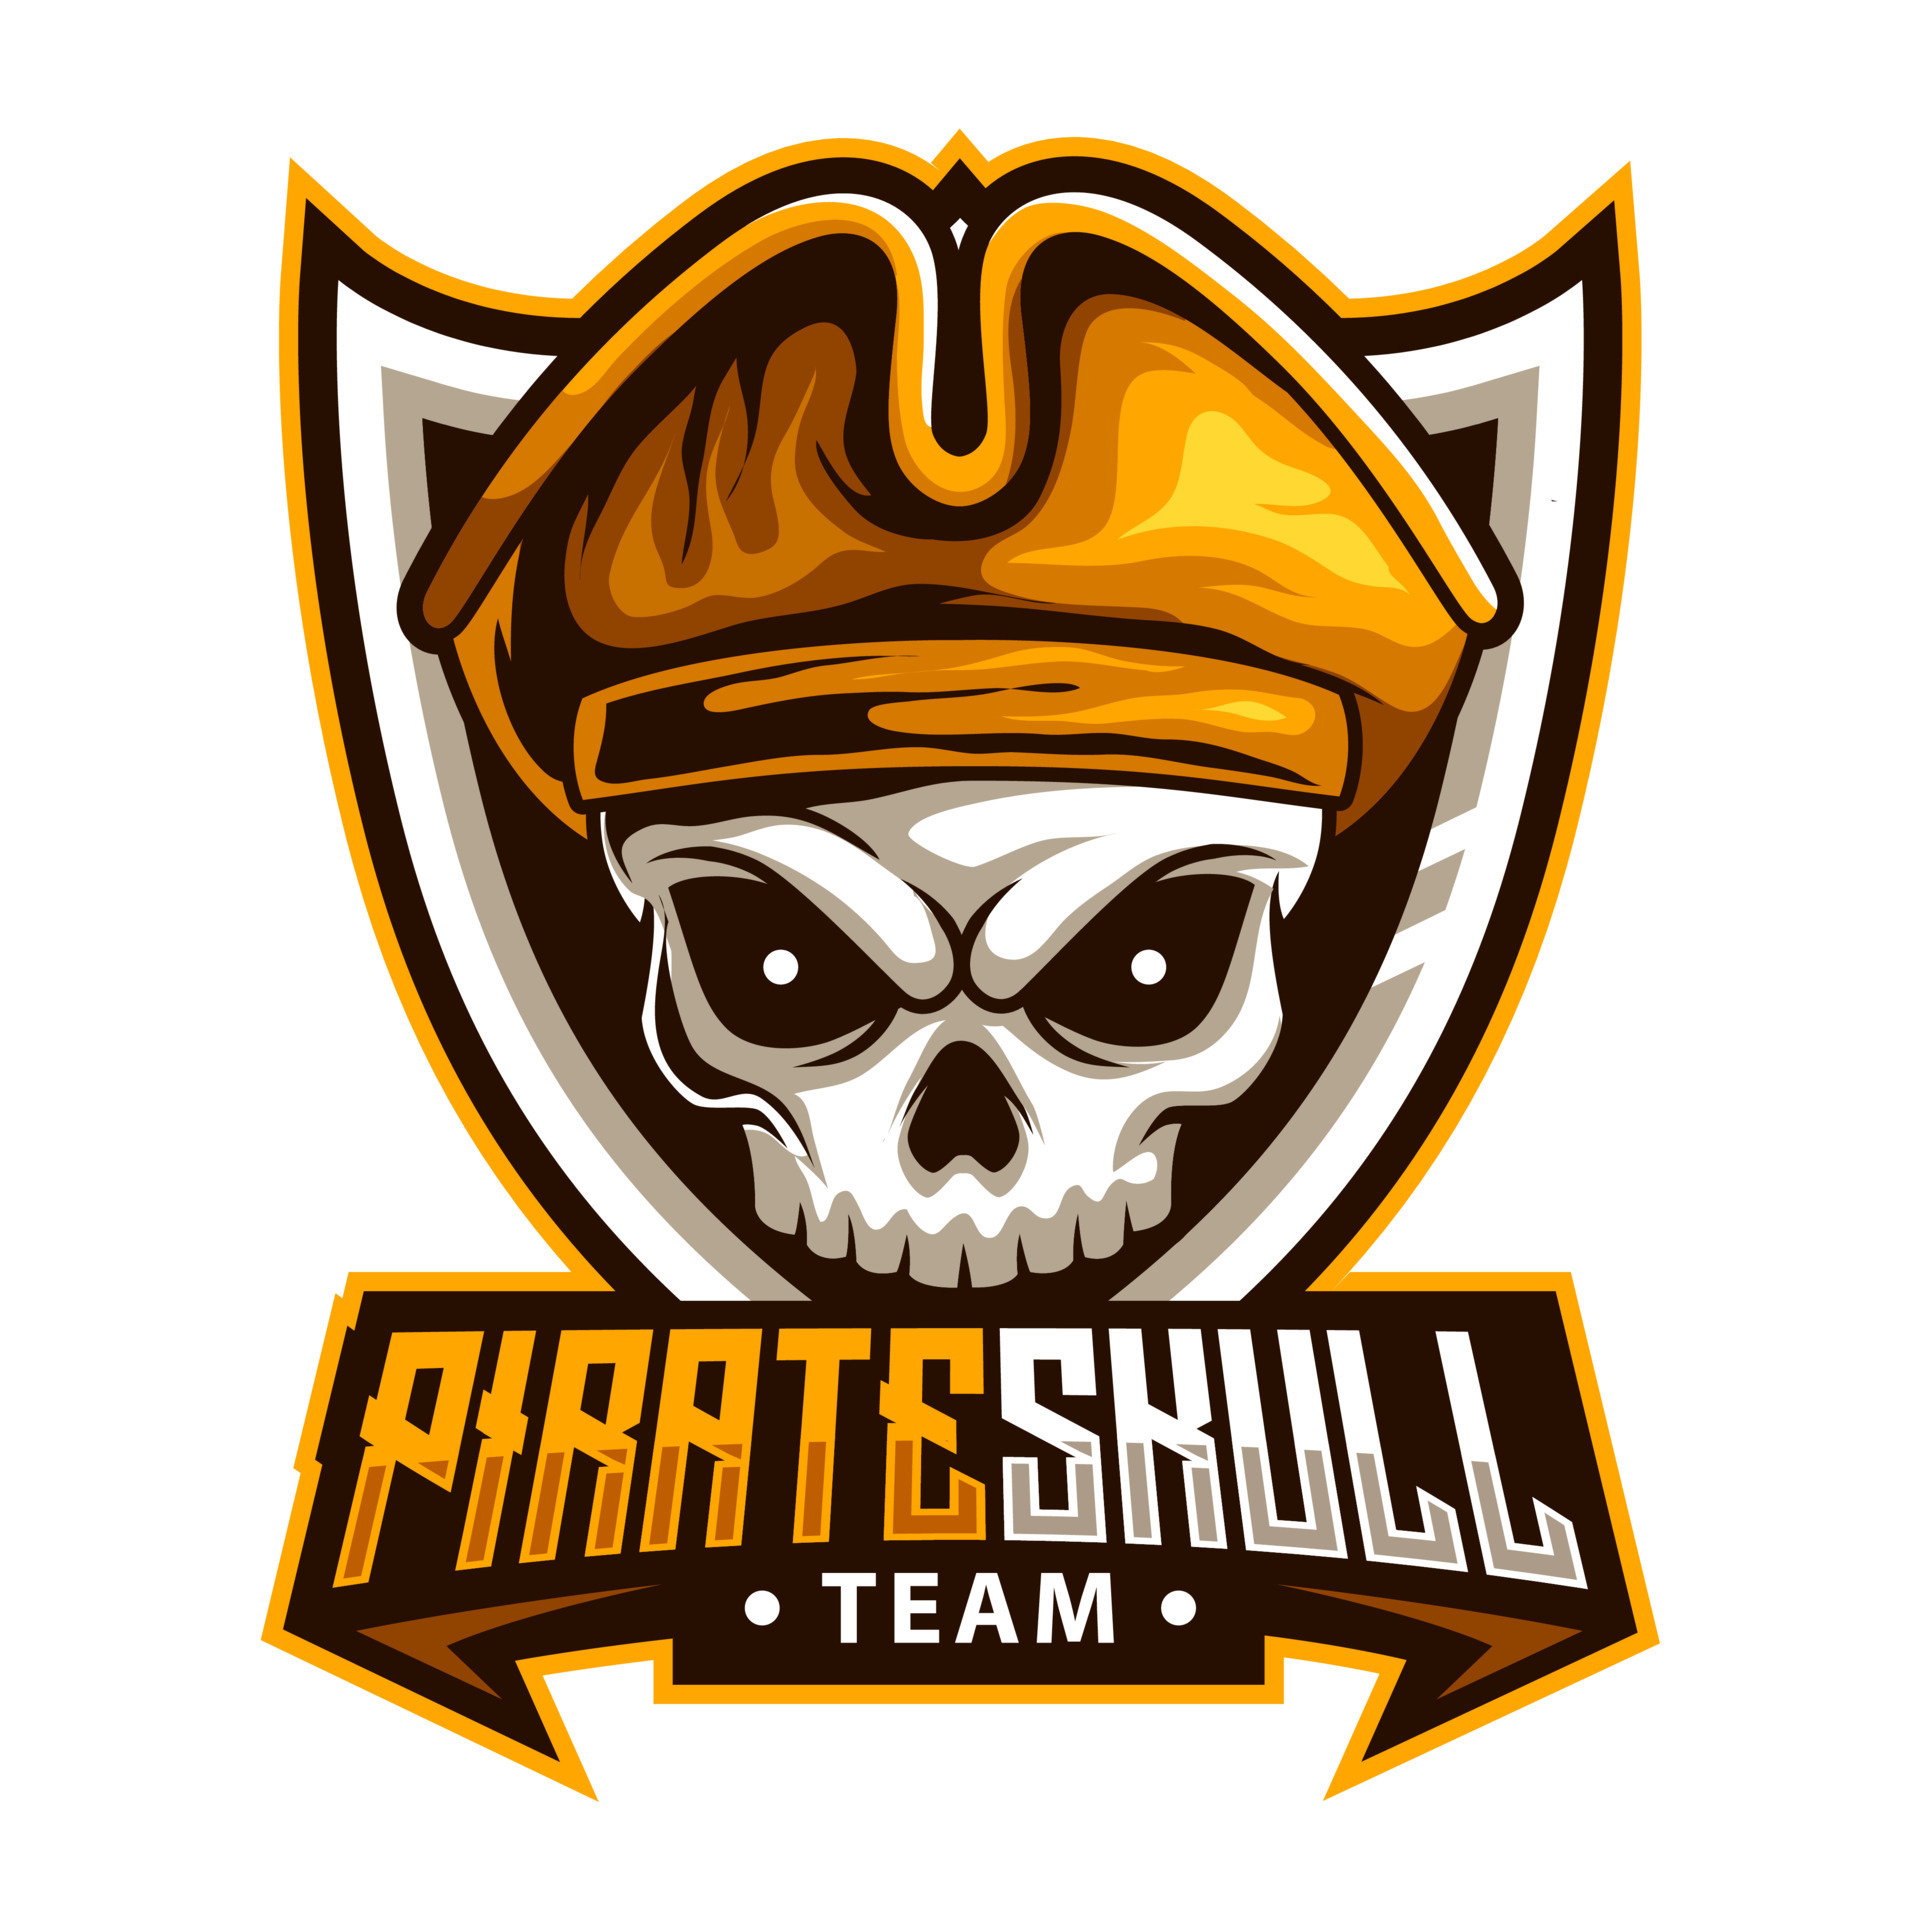 Premium Vector  Pirate vector logo template pirate sport gaming